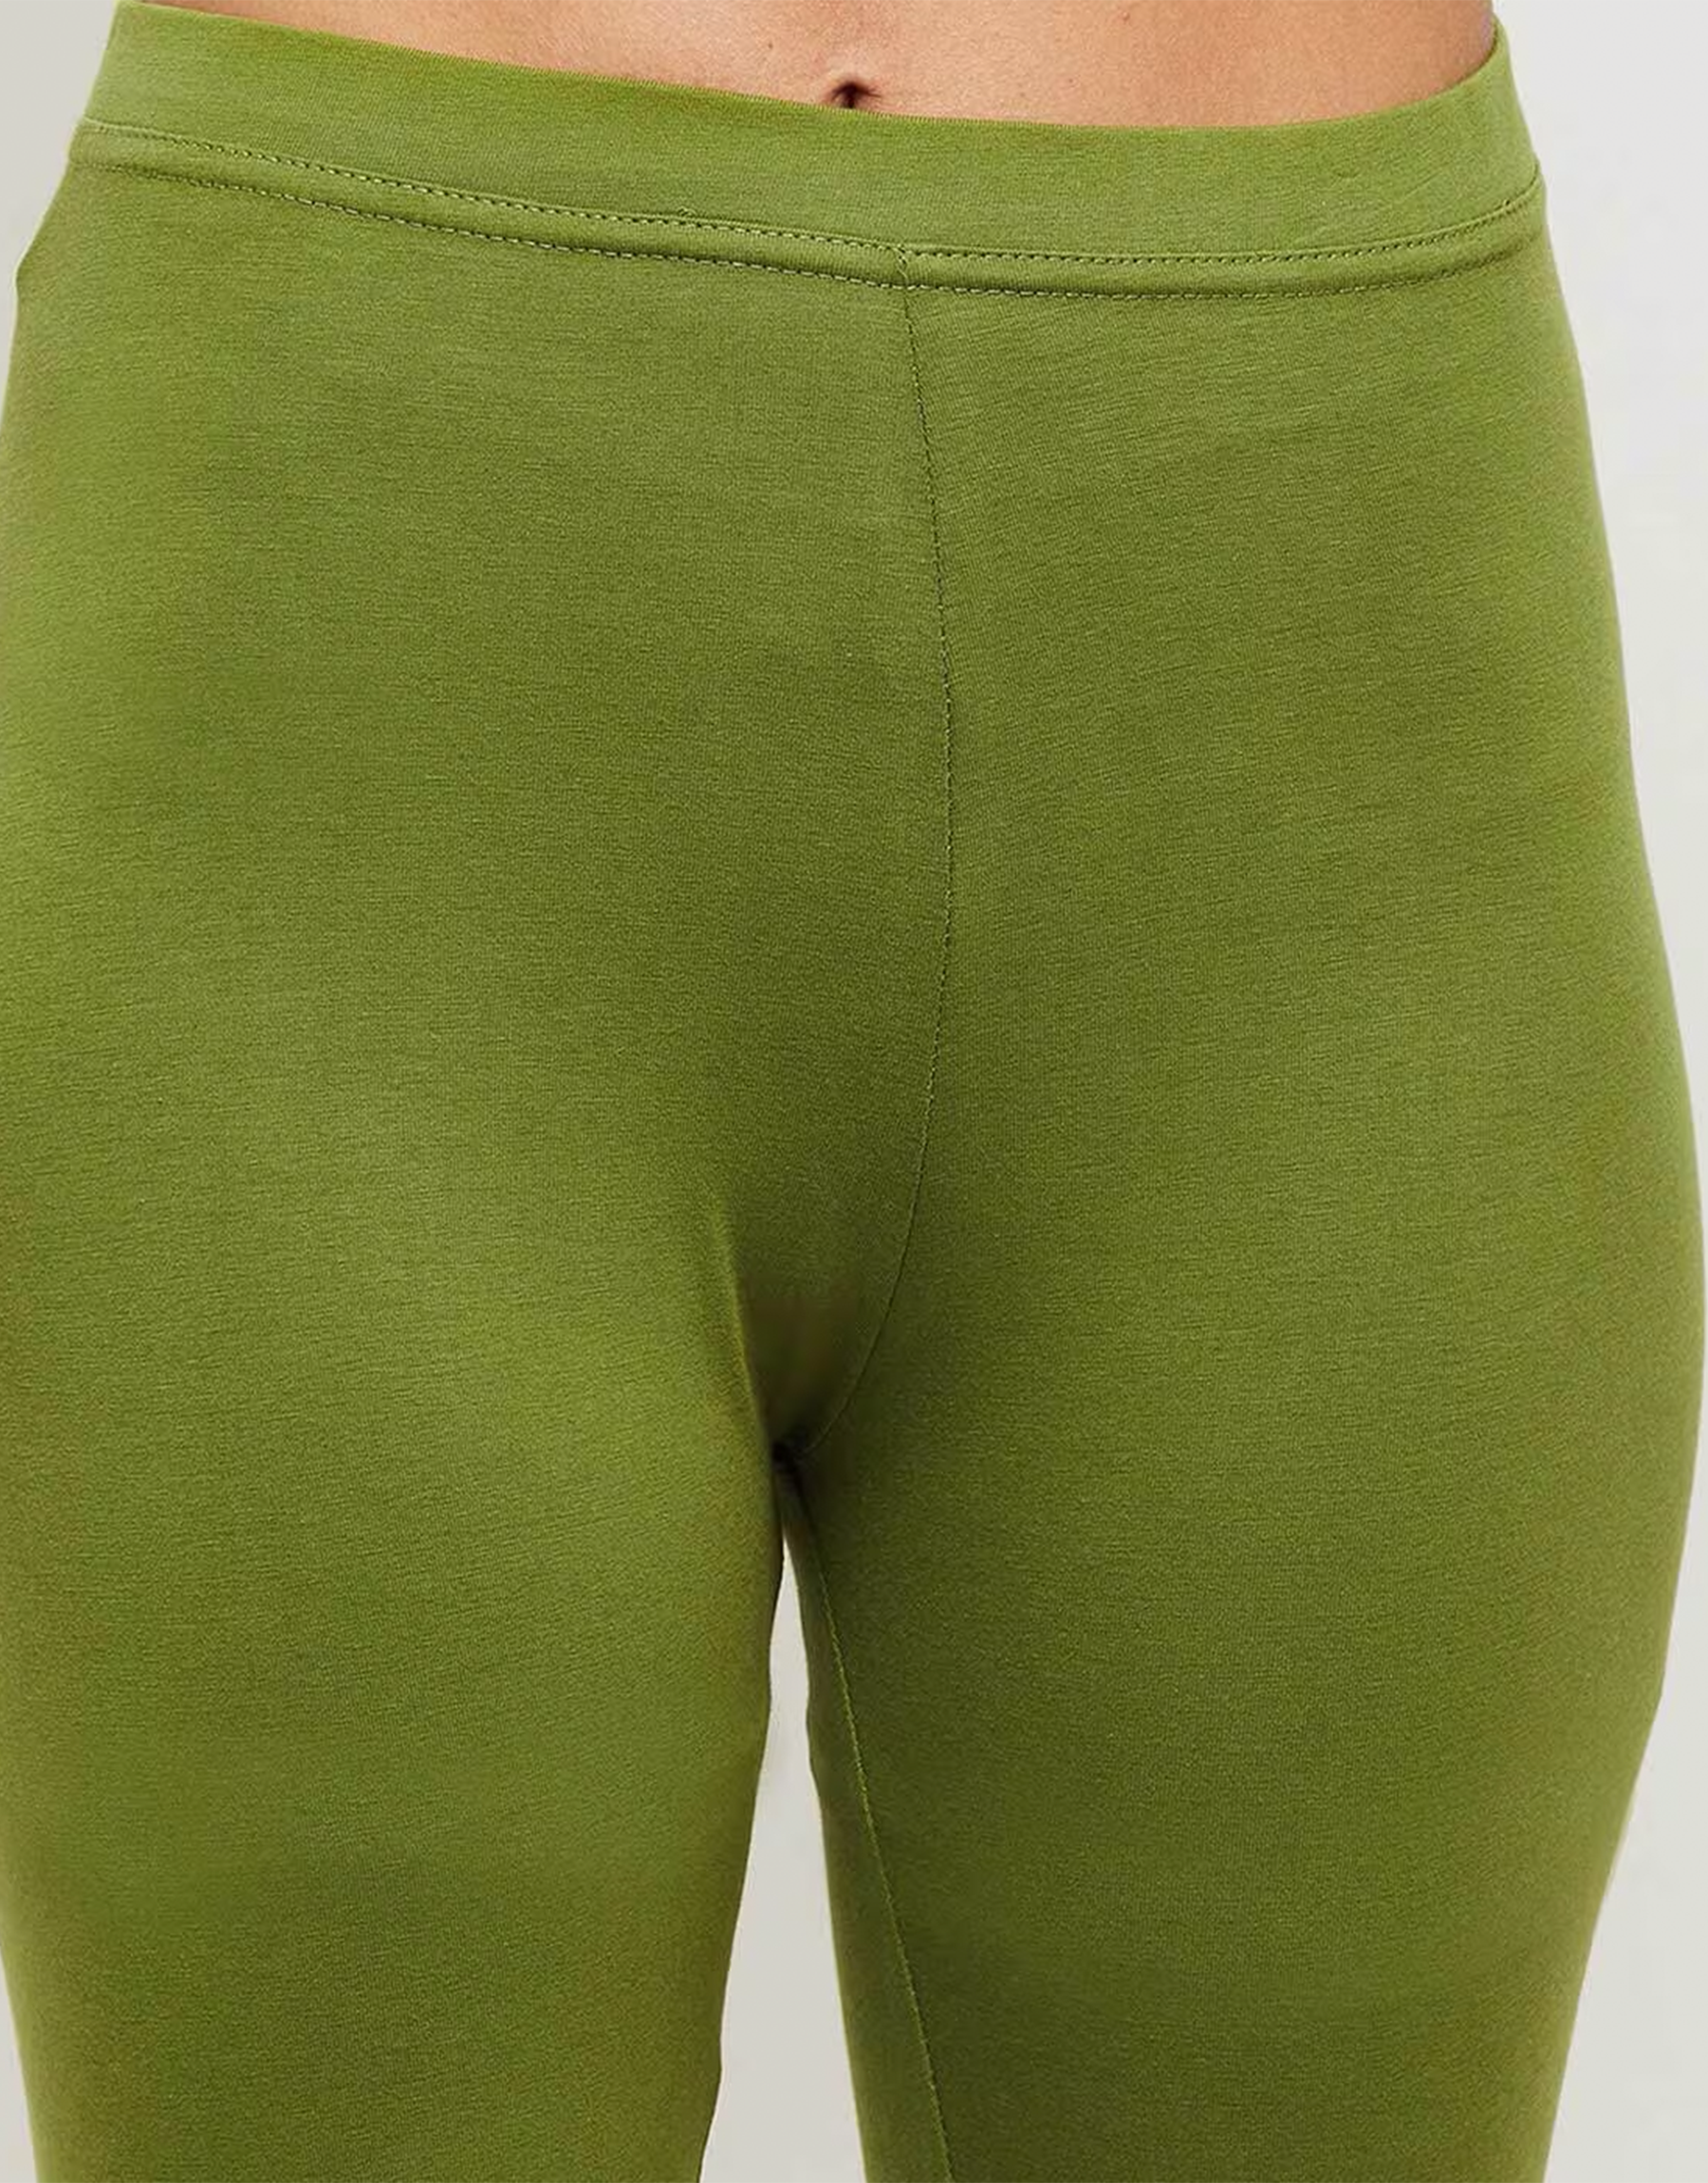 Neon Green Women's Casual Leggings, Bright Green Fancy Dressy Tights -Made  in USA/EU | Heidikimurart Limited